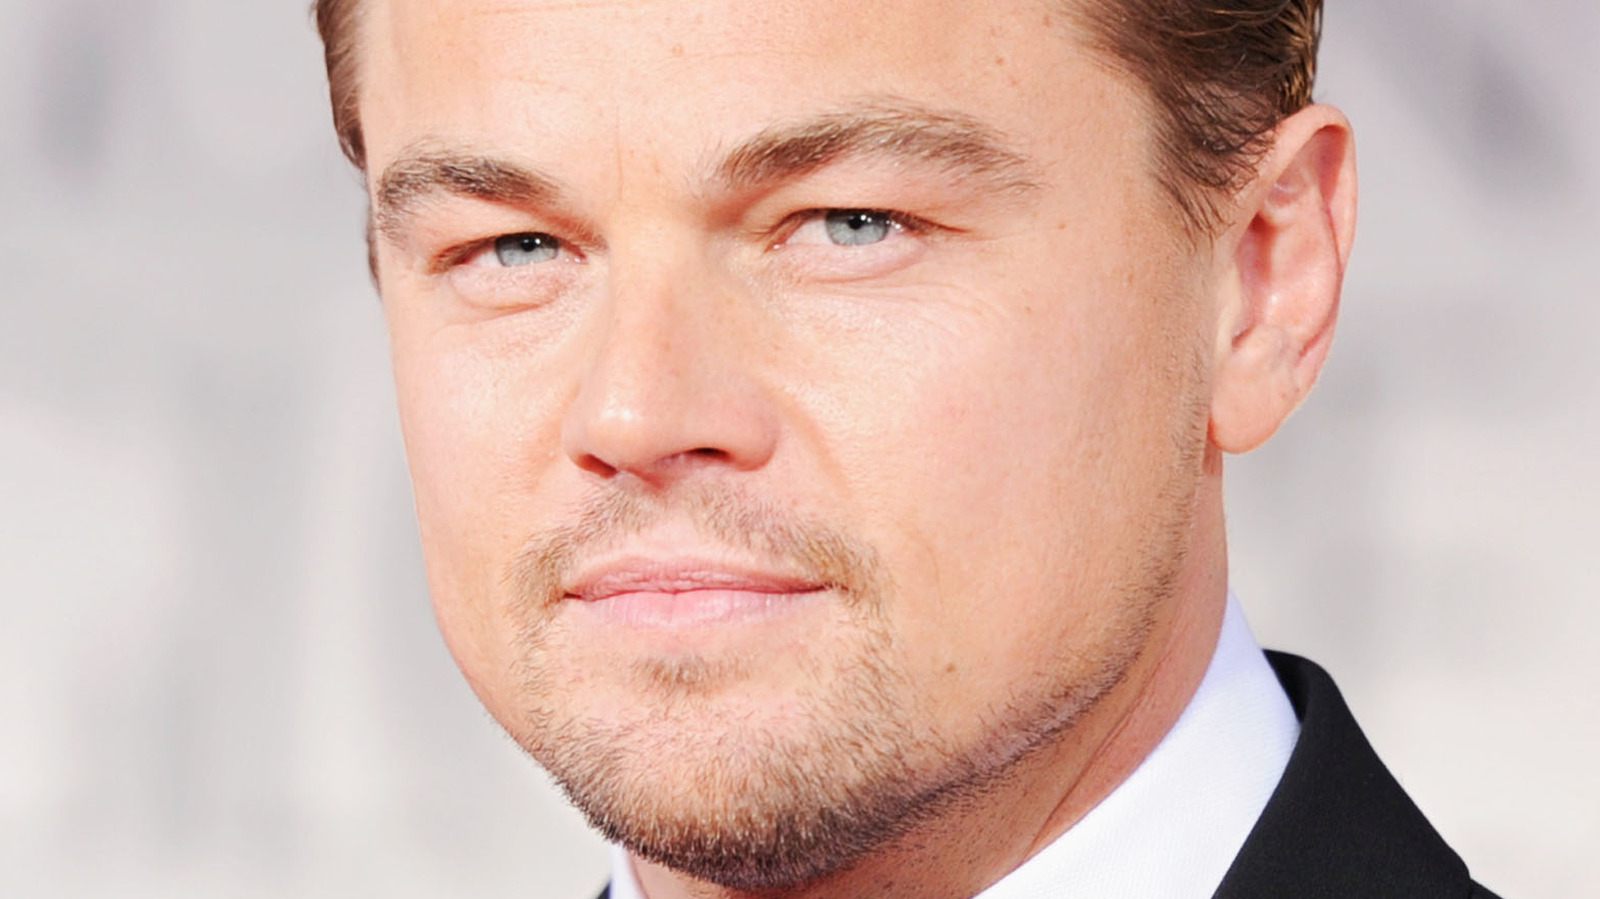 How Old Was Leonardo DiCaprio During The Titanic?